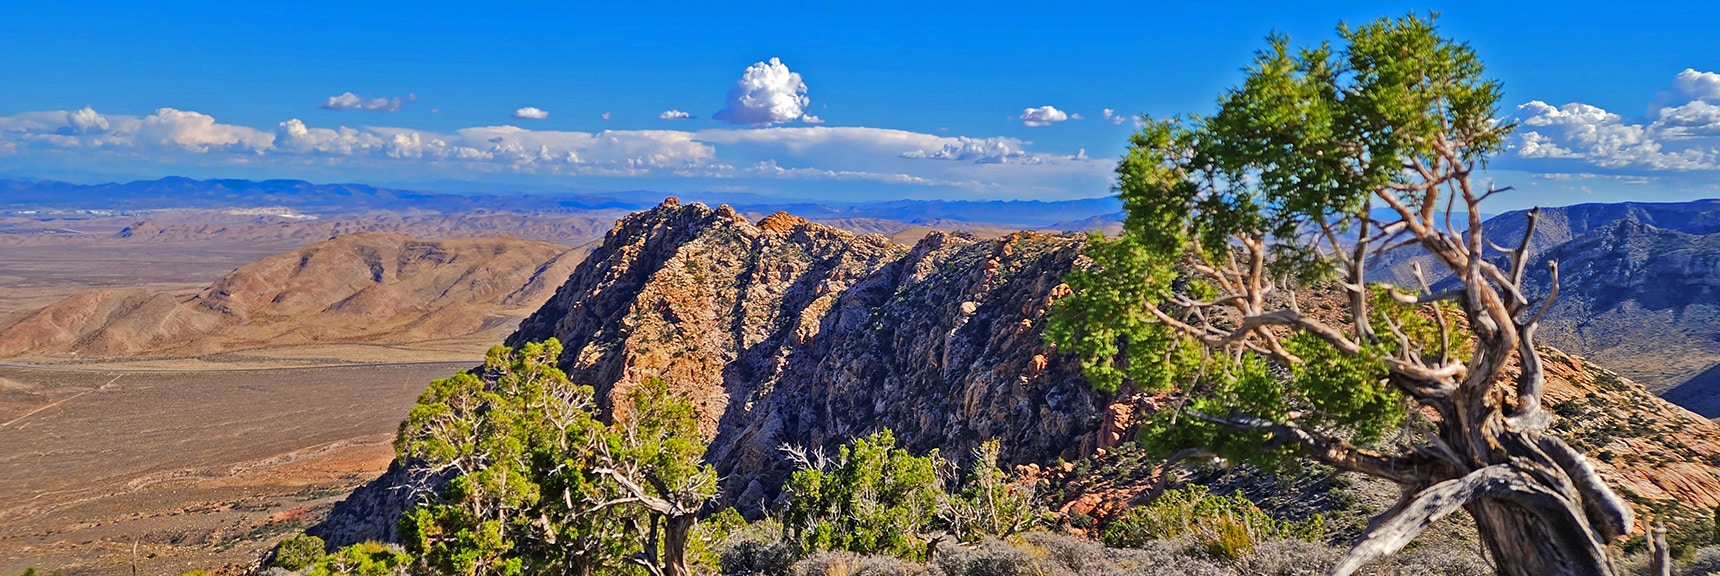 Continuing Approach to Hollow Rock Peak | Hollow Rock Peak | Rainbow Mountain Wilderness, Nevada